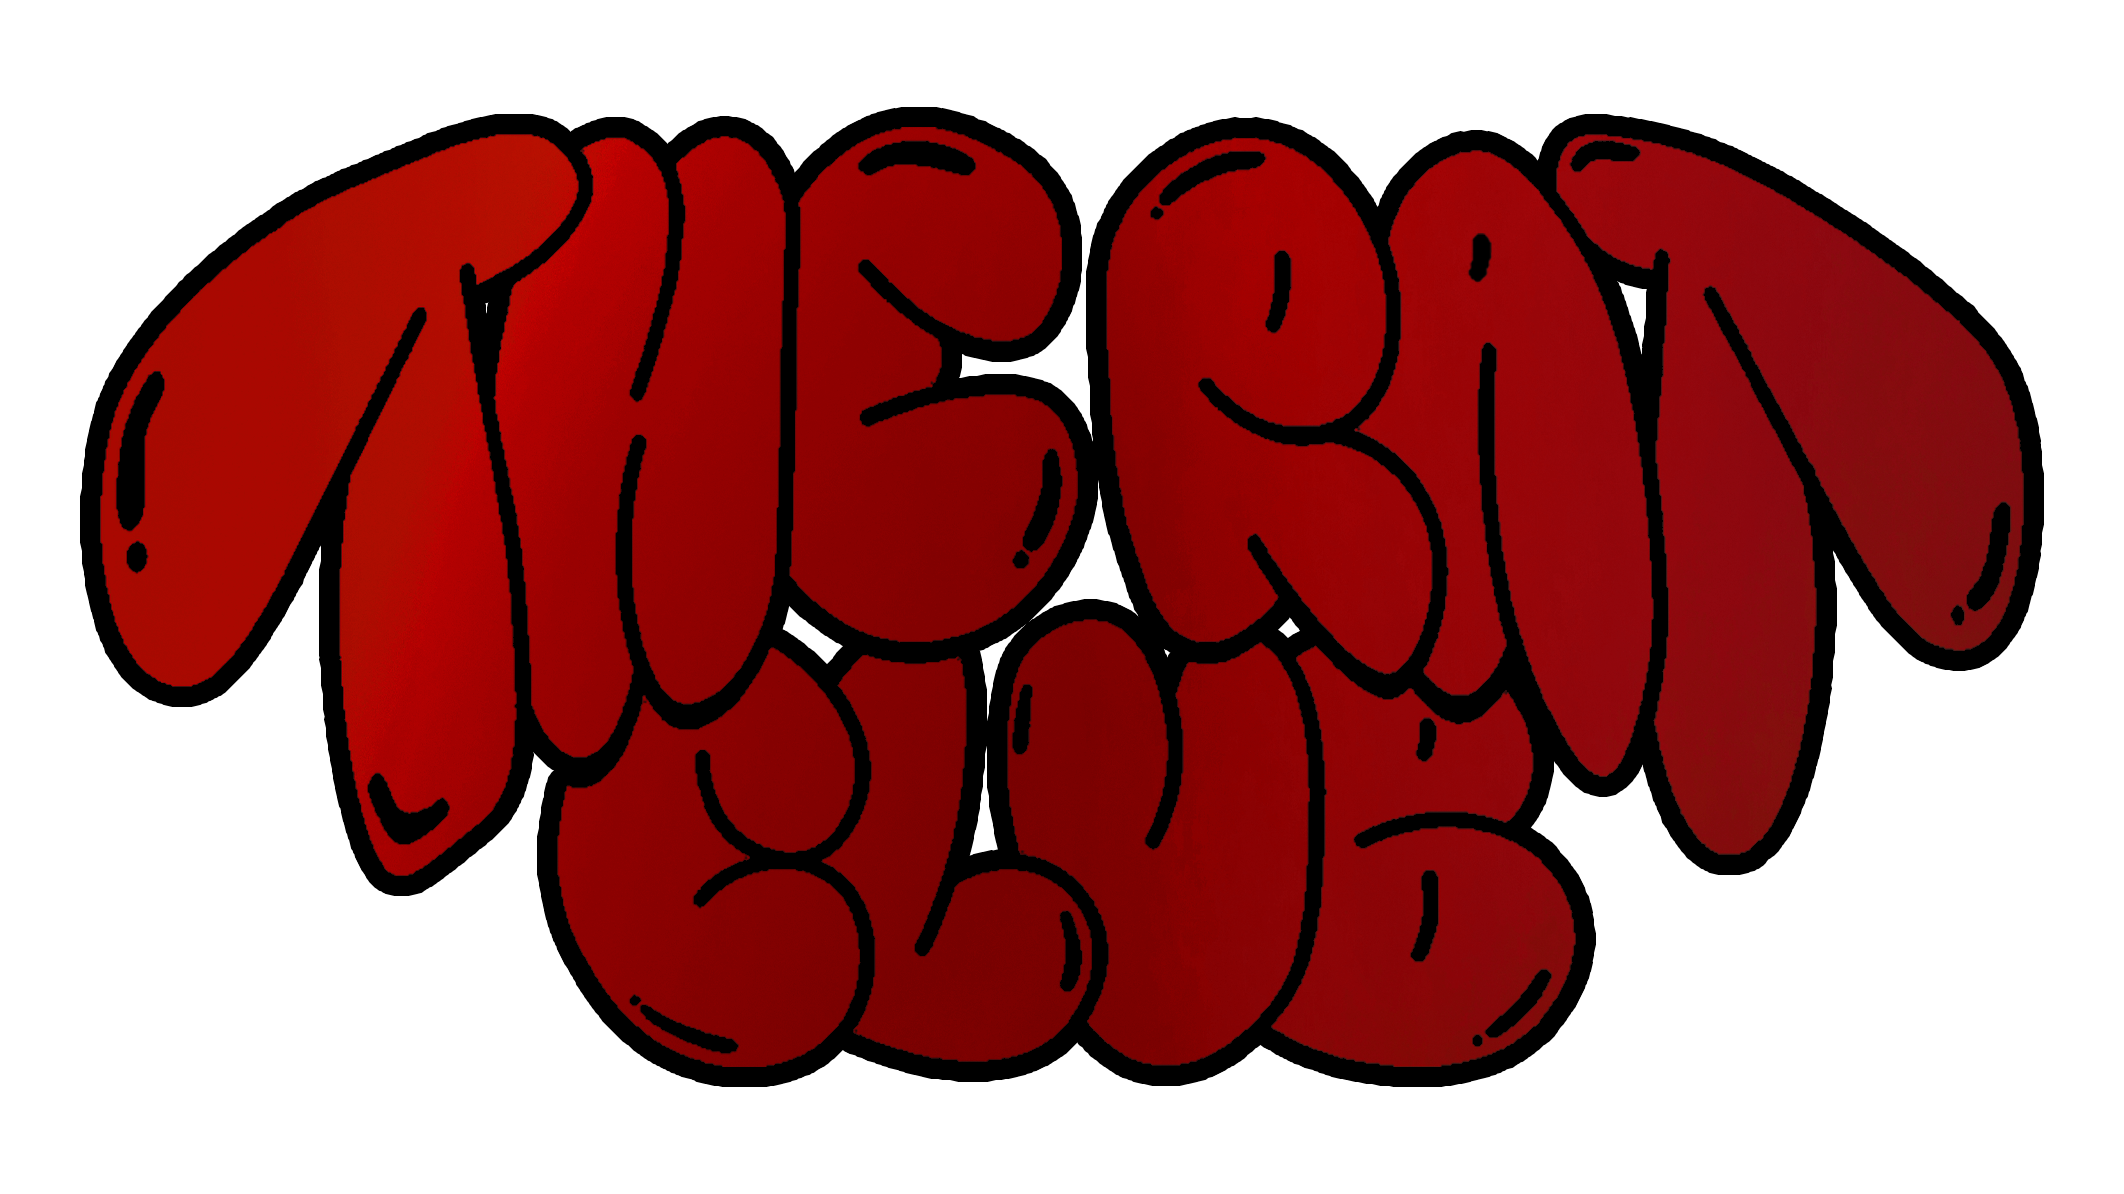 Steam Curator: louie the rat fanclub